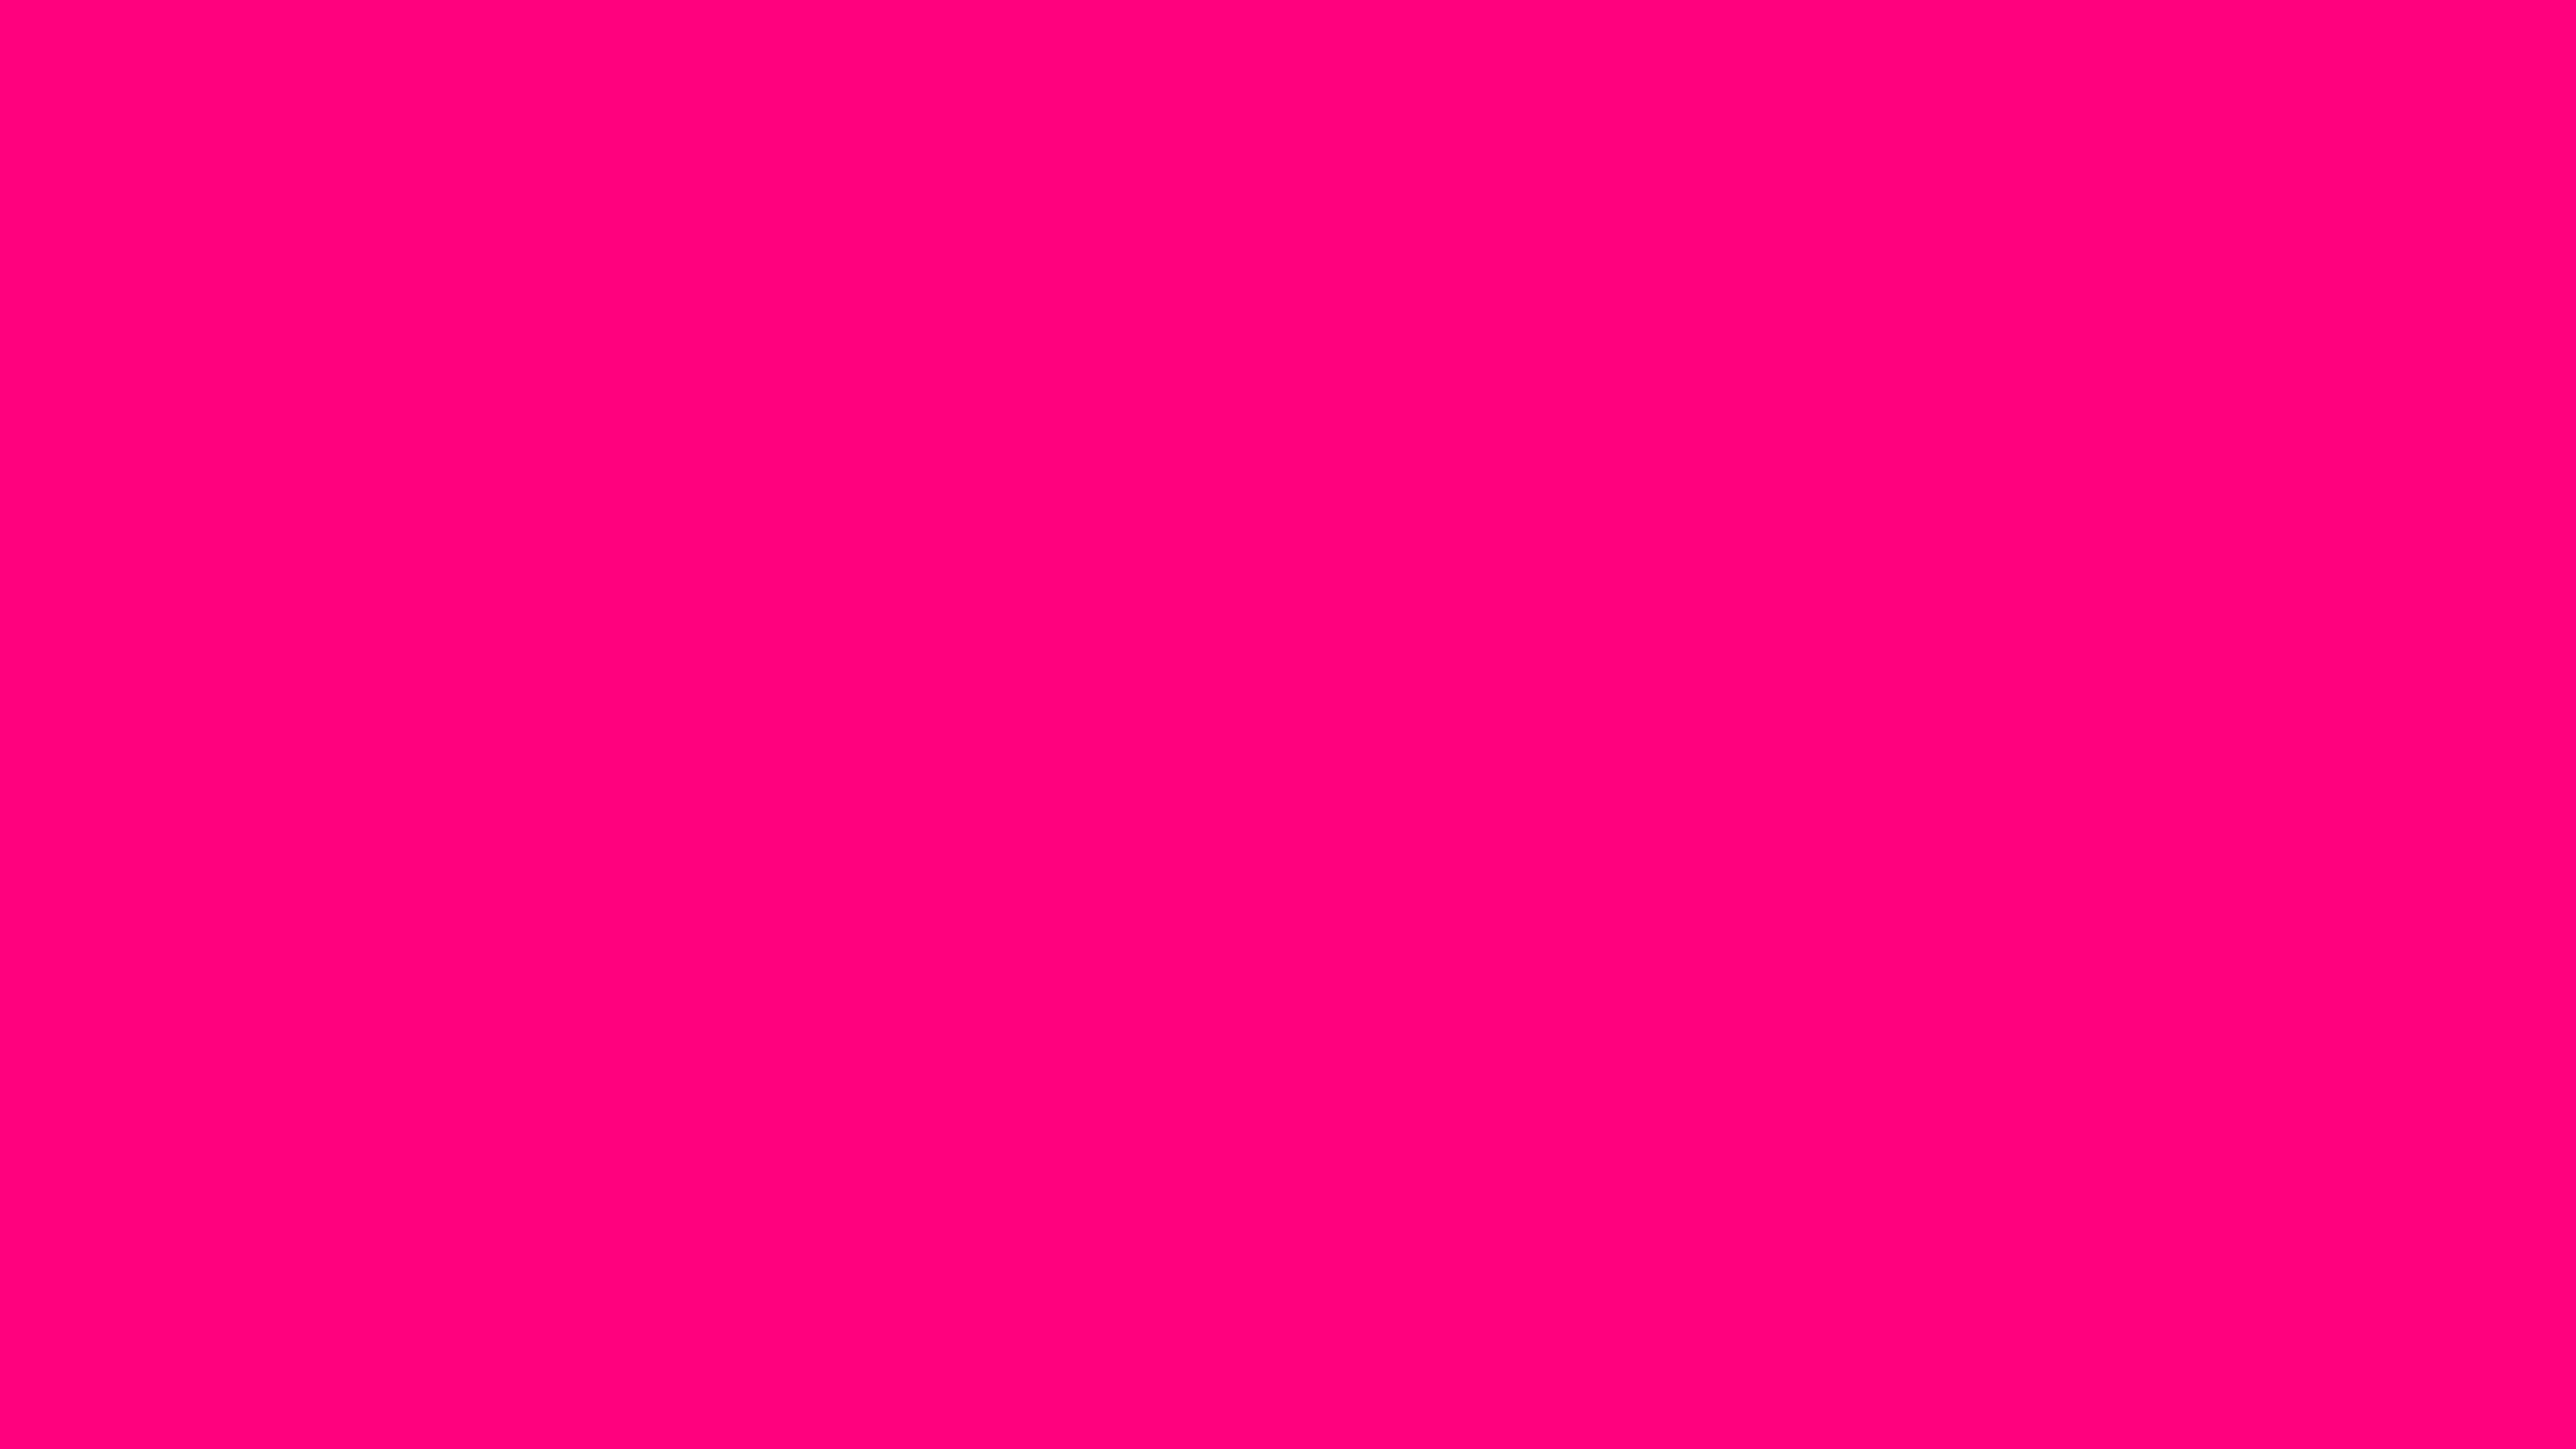 7680x4320 Rose Solid Color Background